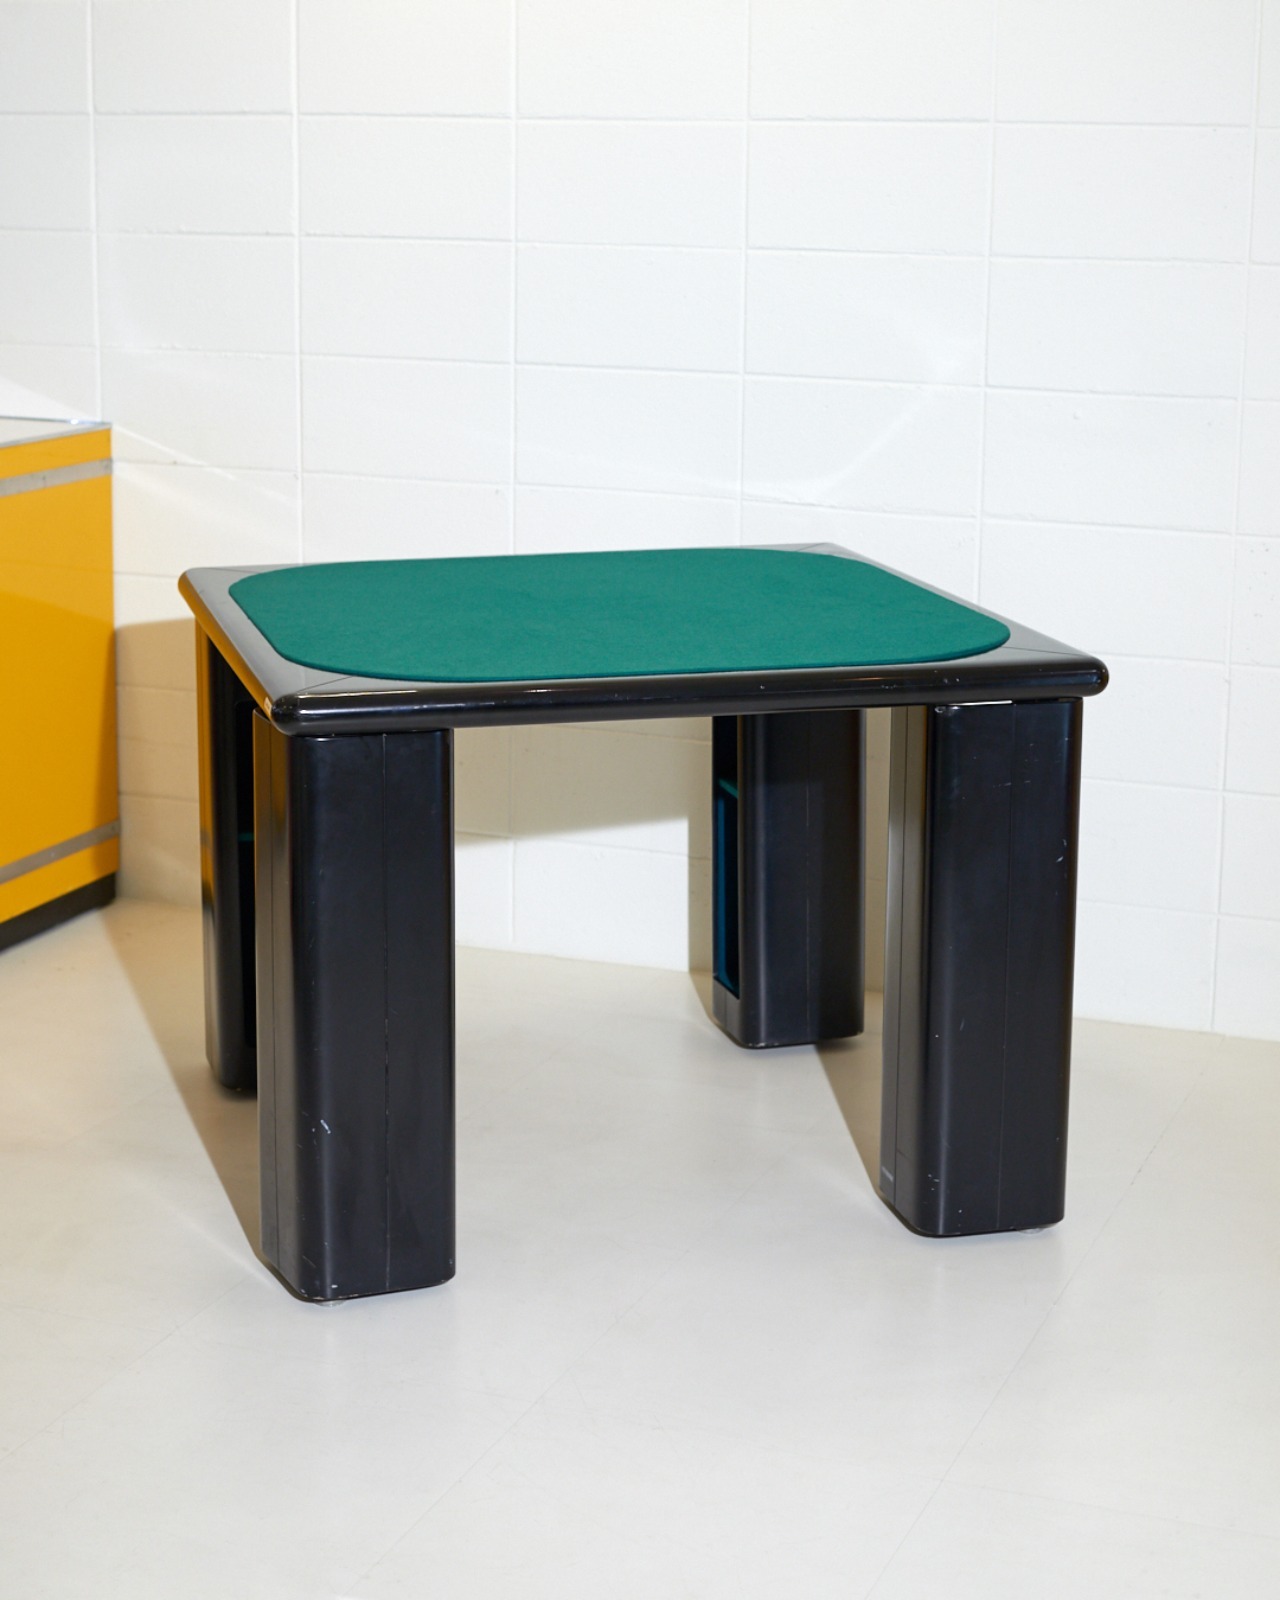 Pozzi Milano Game Table By Pierluigi Molinari